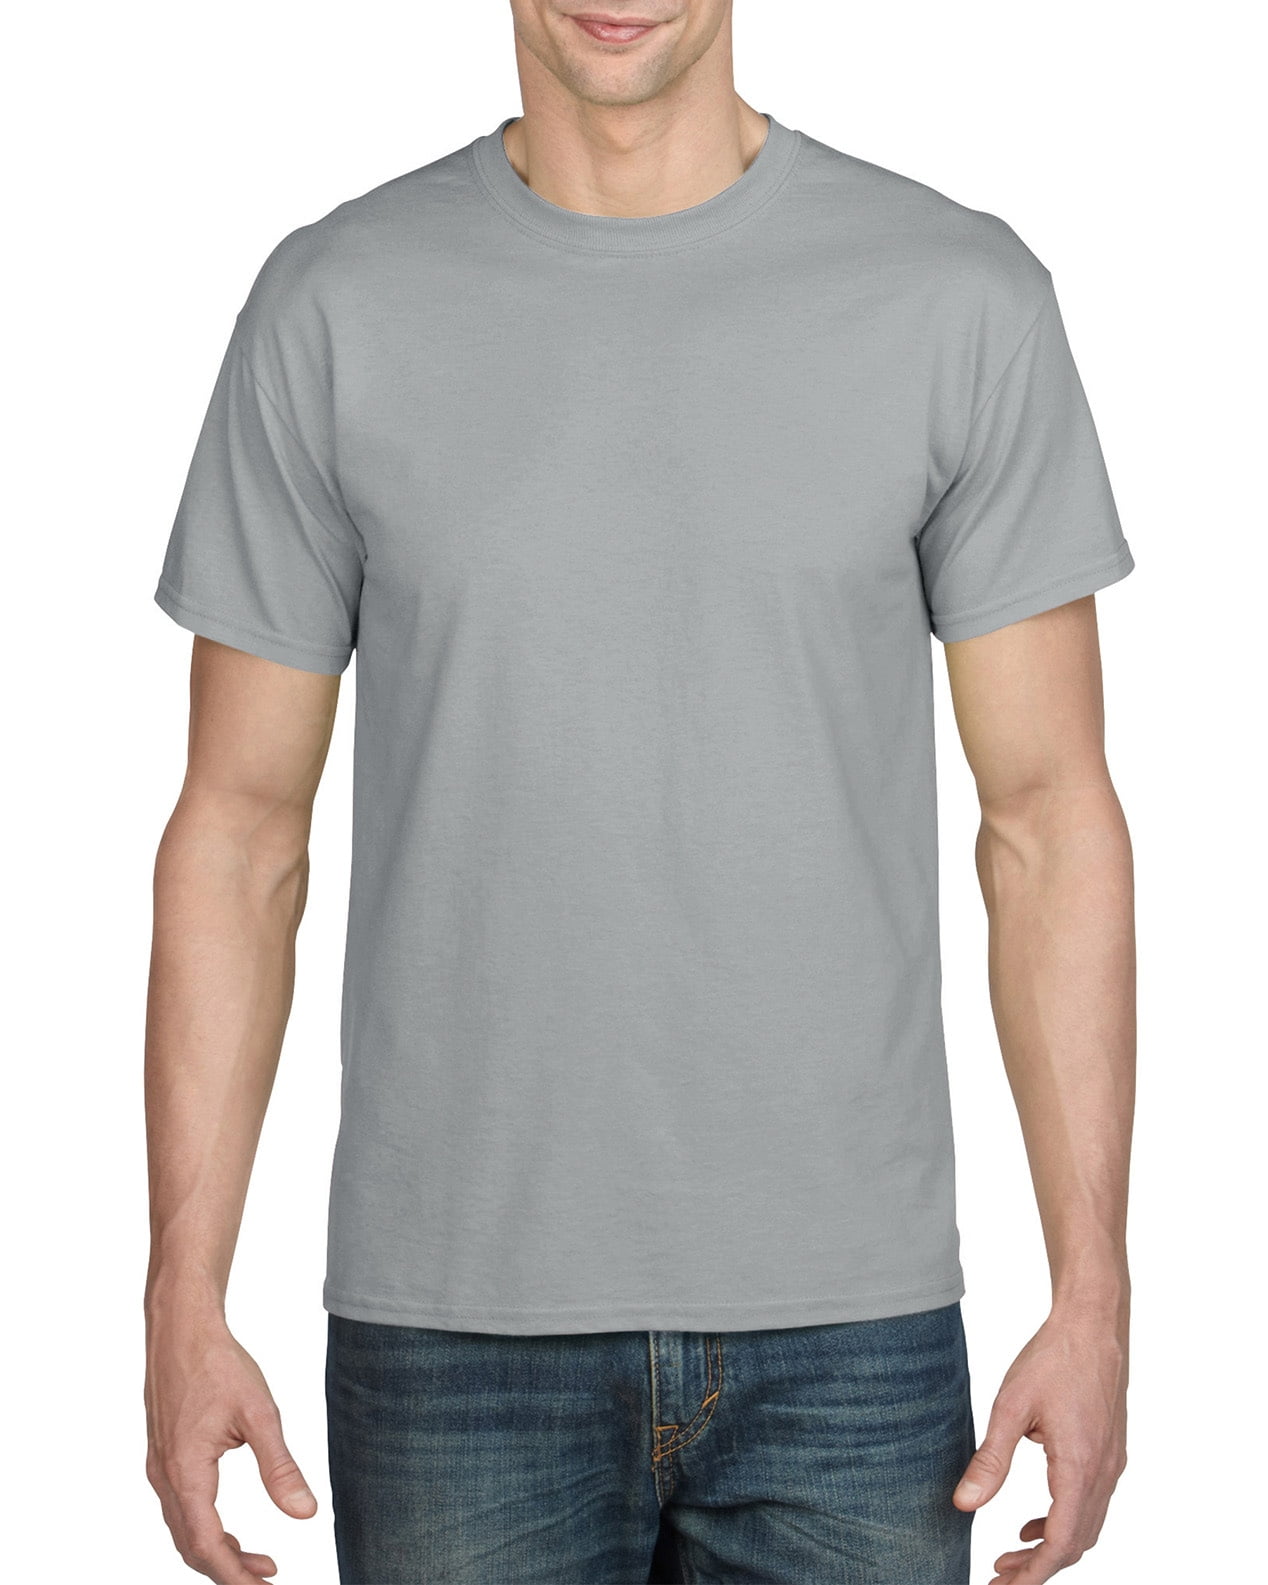 Gildan - Gildan Mens DryBlend T-Shirt, S, Gravel, S, Gravel - Walmart ...